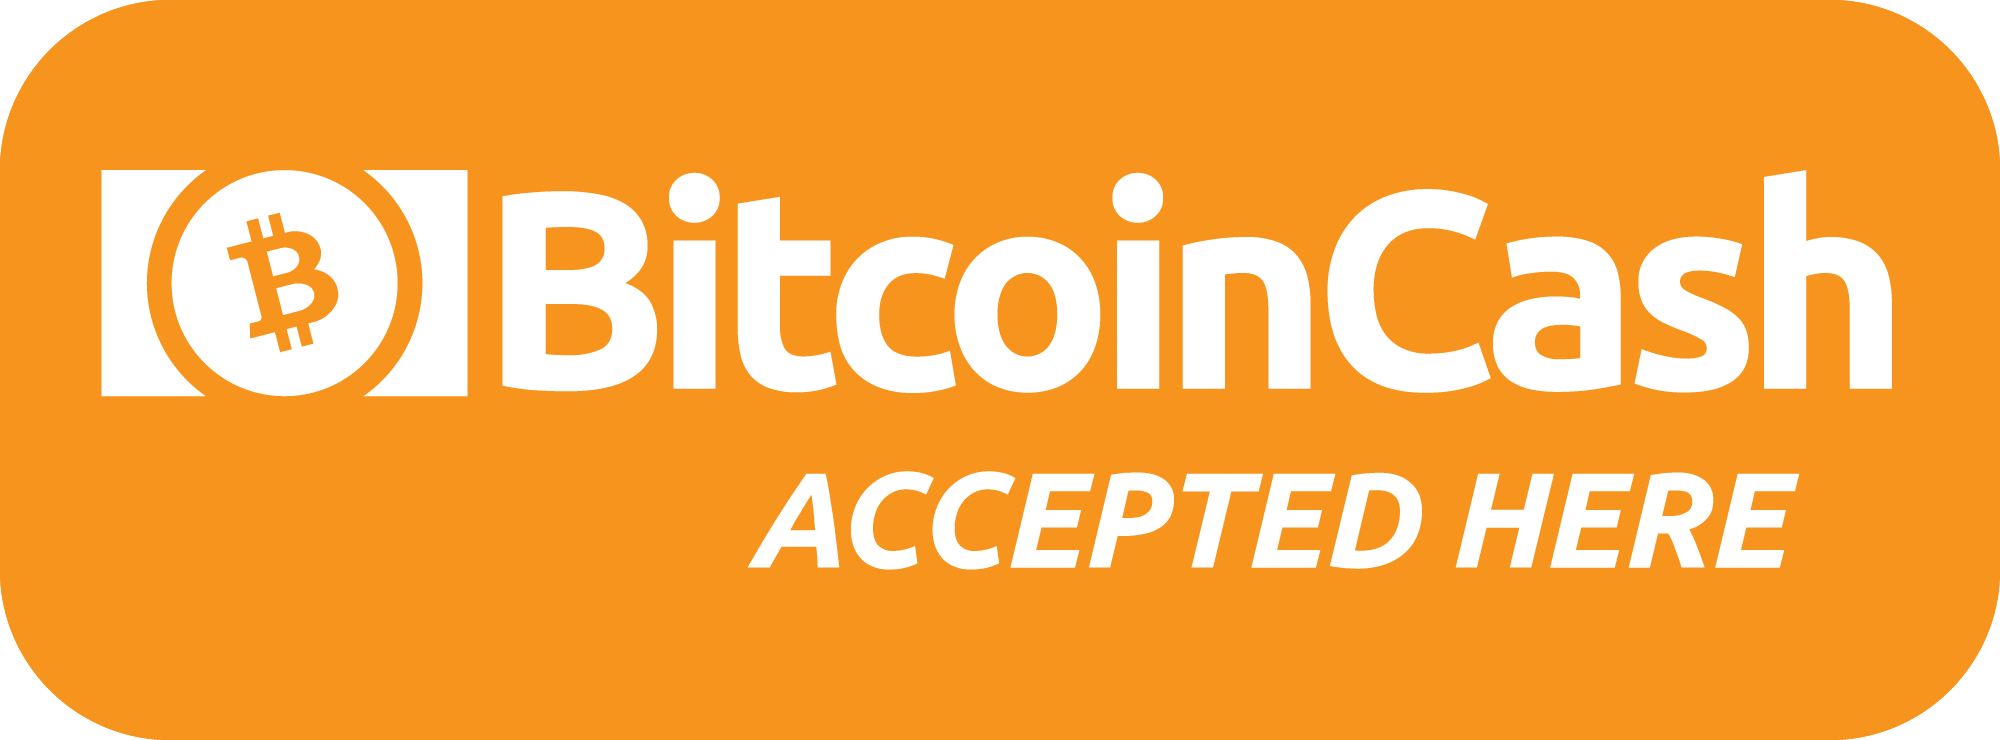 Bitcoin Cash Logo - Логотипы и изображения — Bitcoin Cash